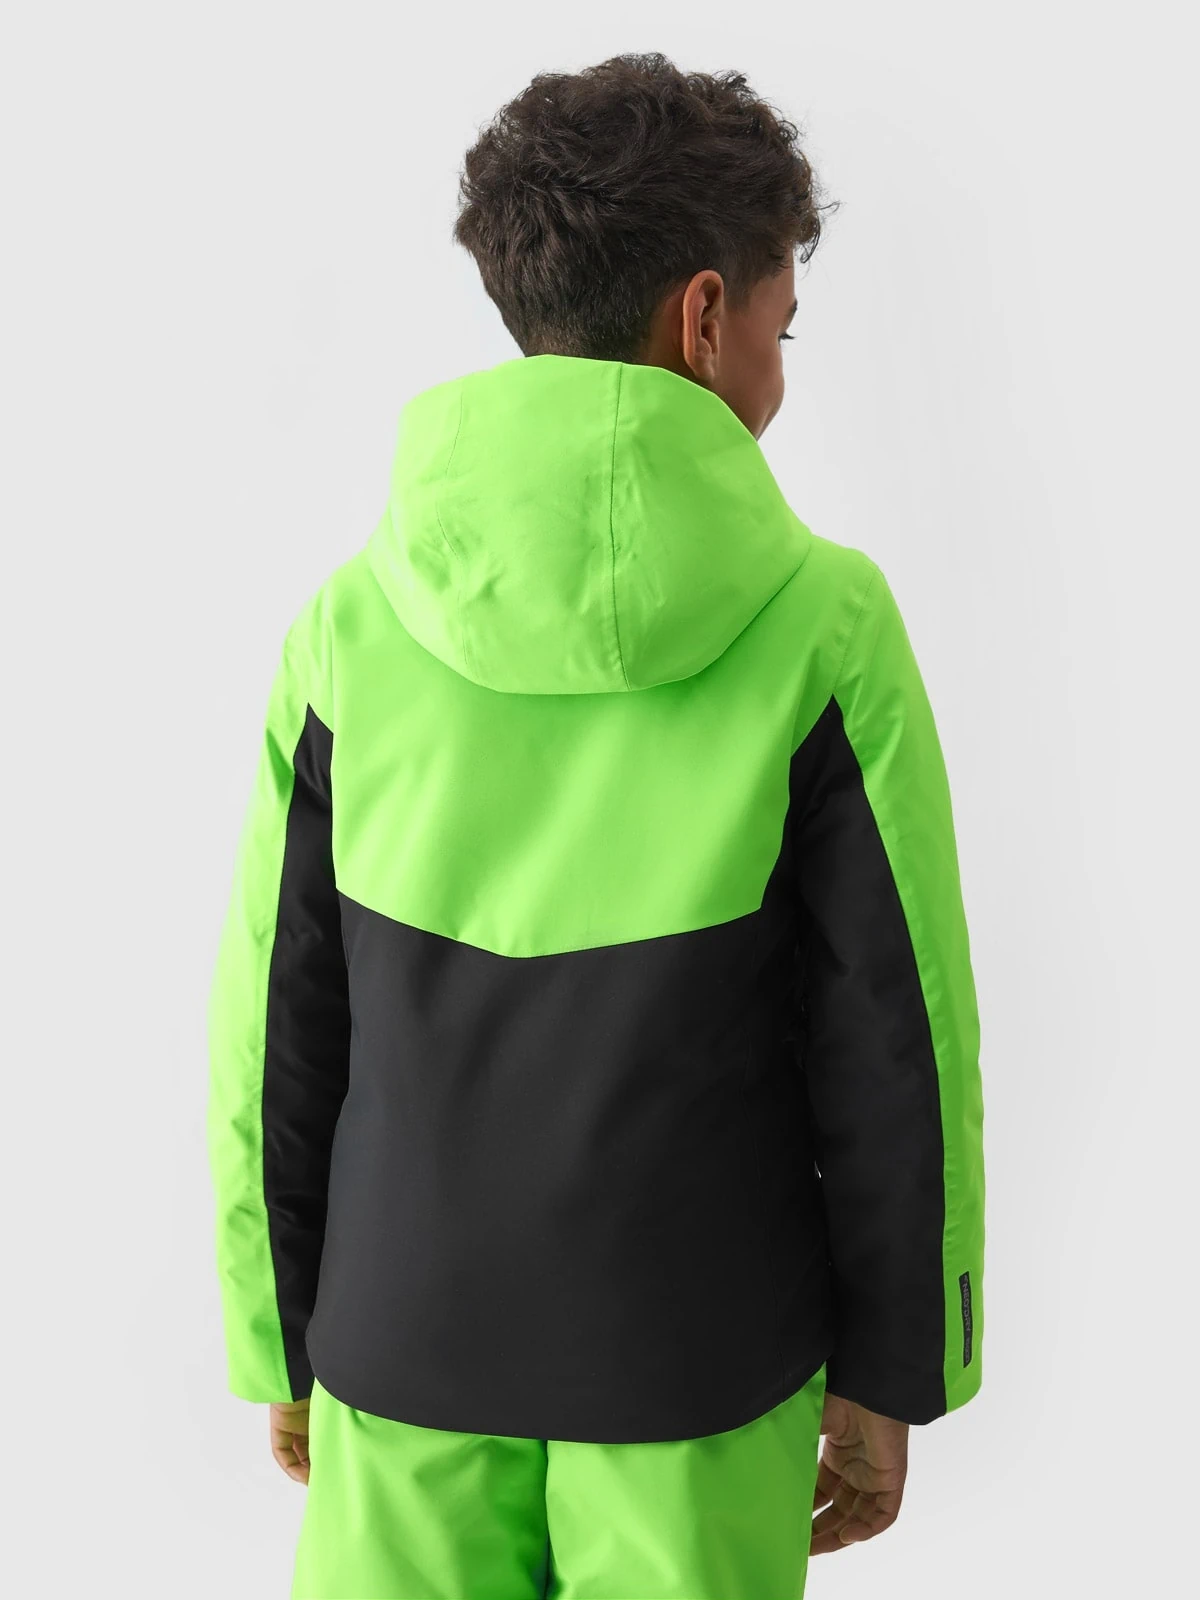 Scott Boys Jacket ULTIMATE DRYO 10 light grey/grey green, Kids skiwear, Skiwear, Alpine Skis